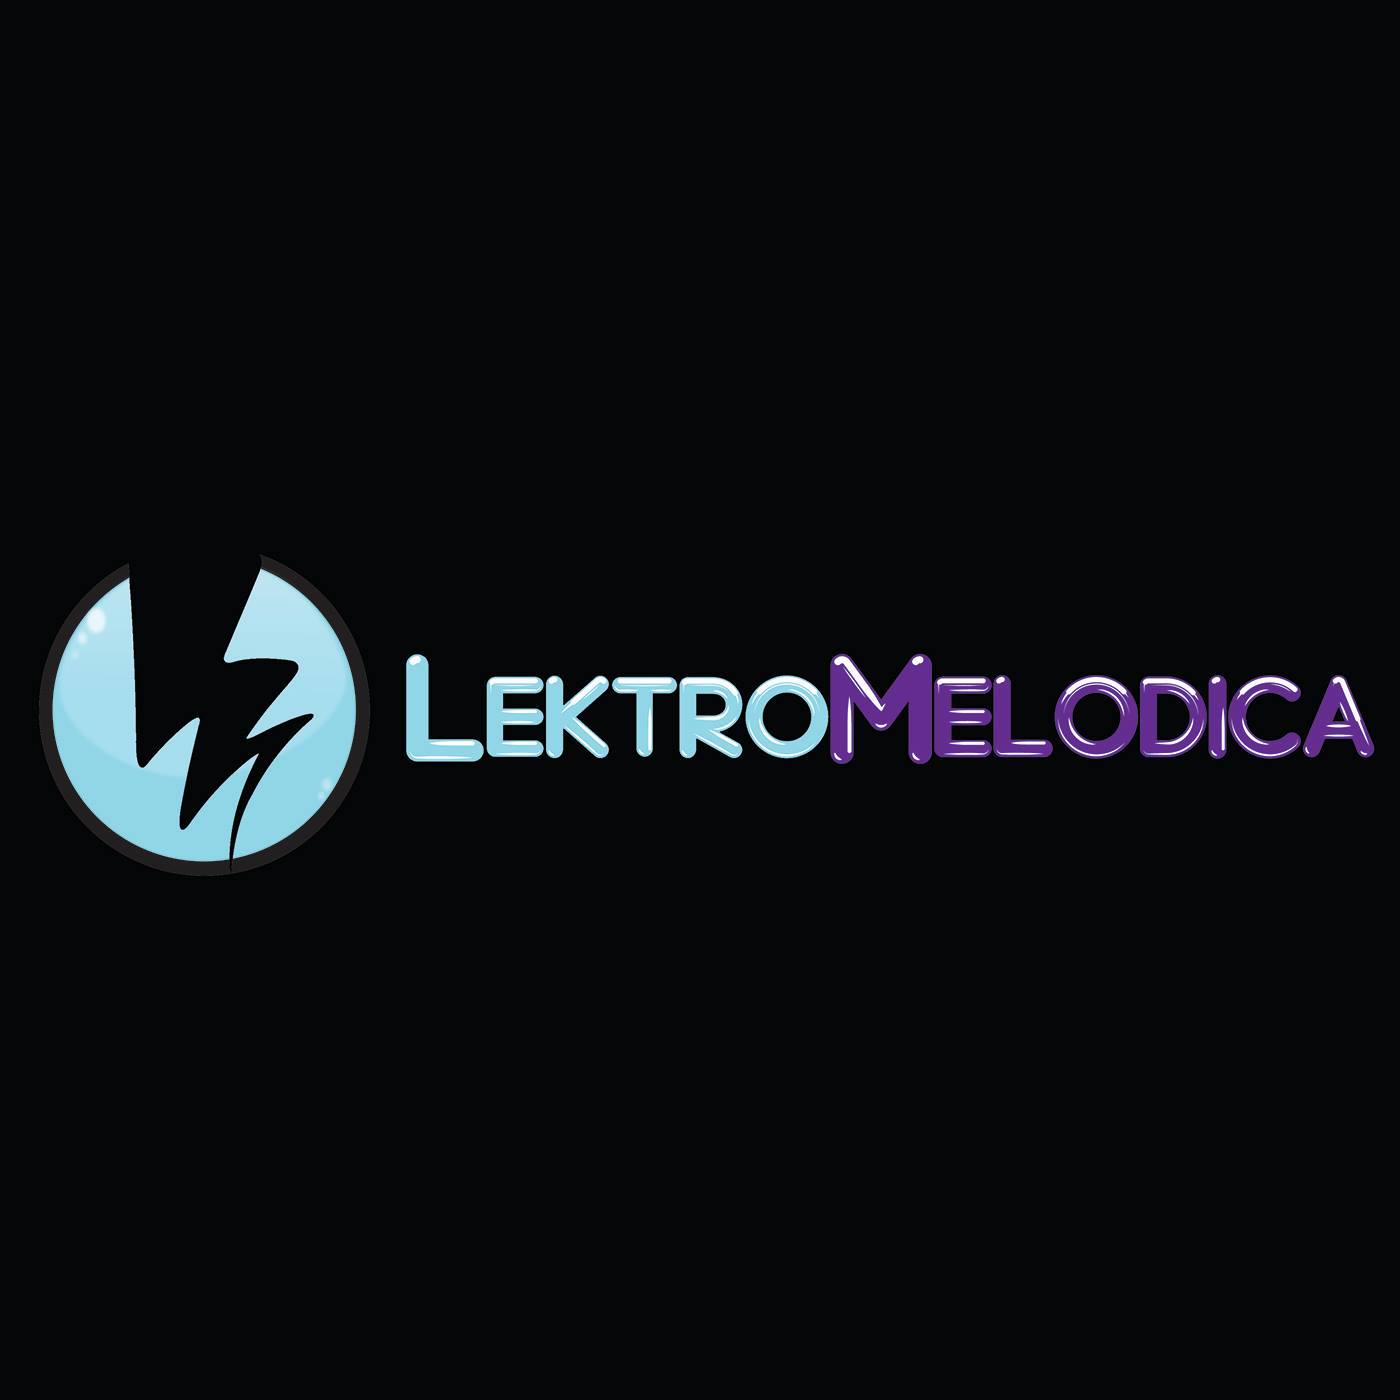 LektroMelodica